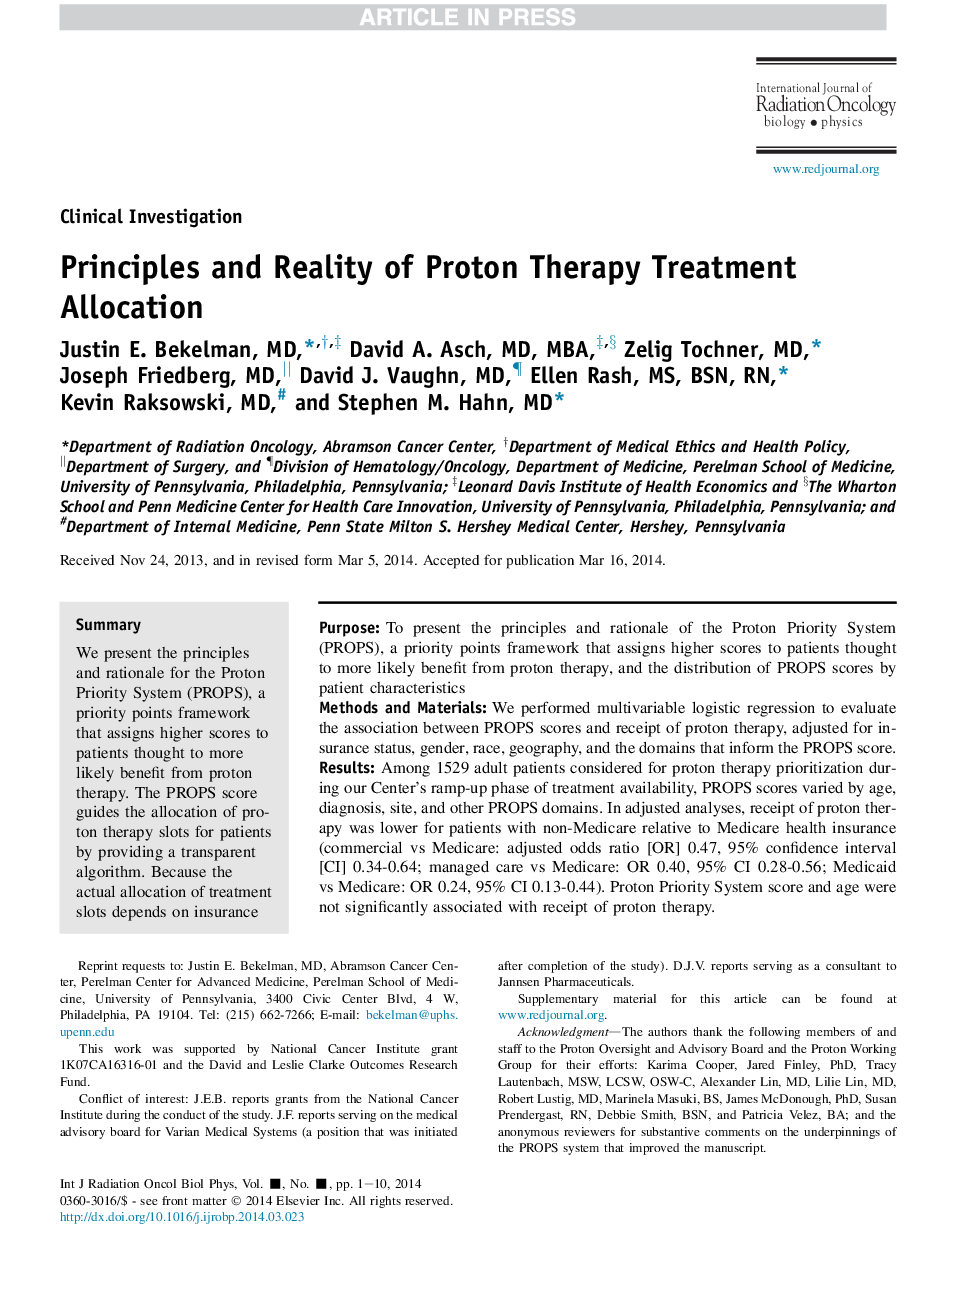 اصول و واقعیت تخصیص درمان پروتون درمان 